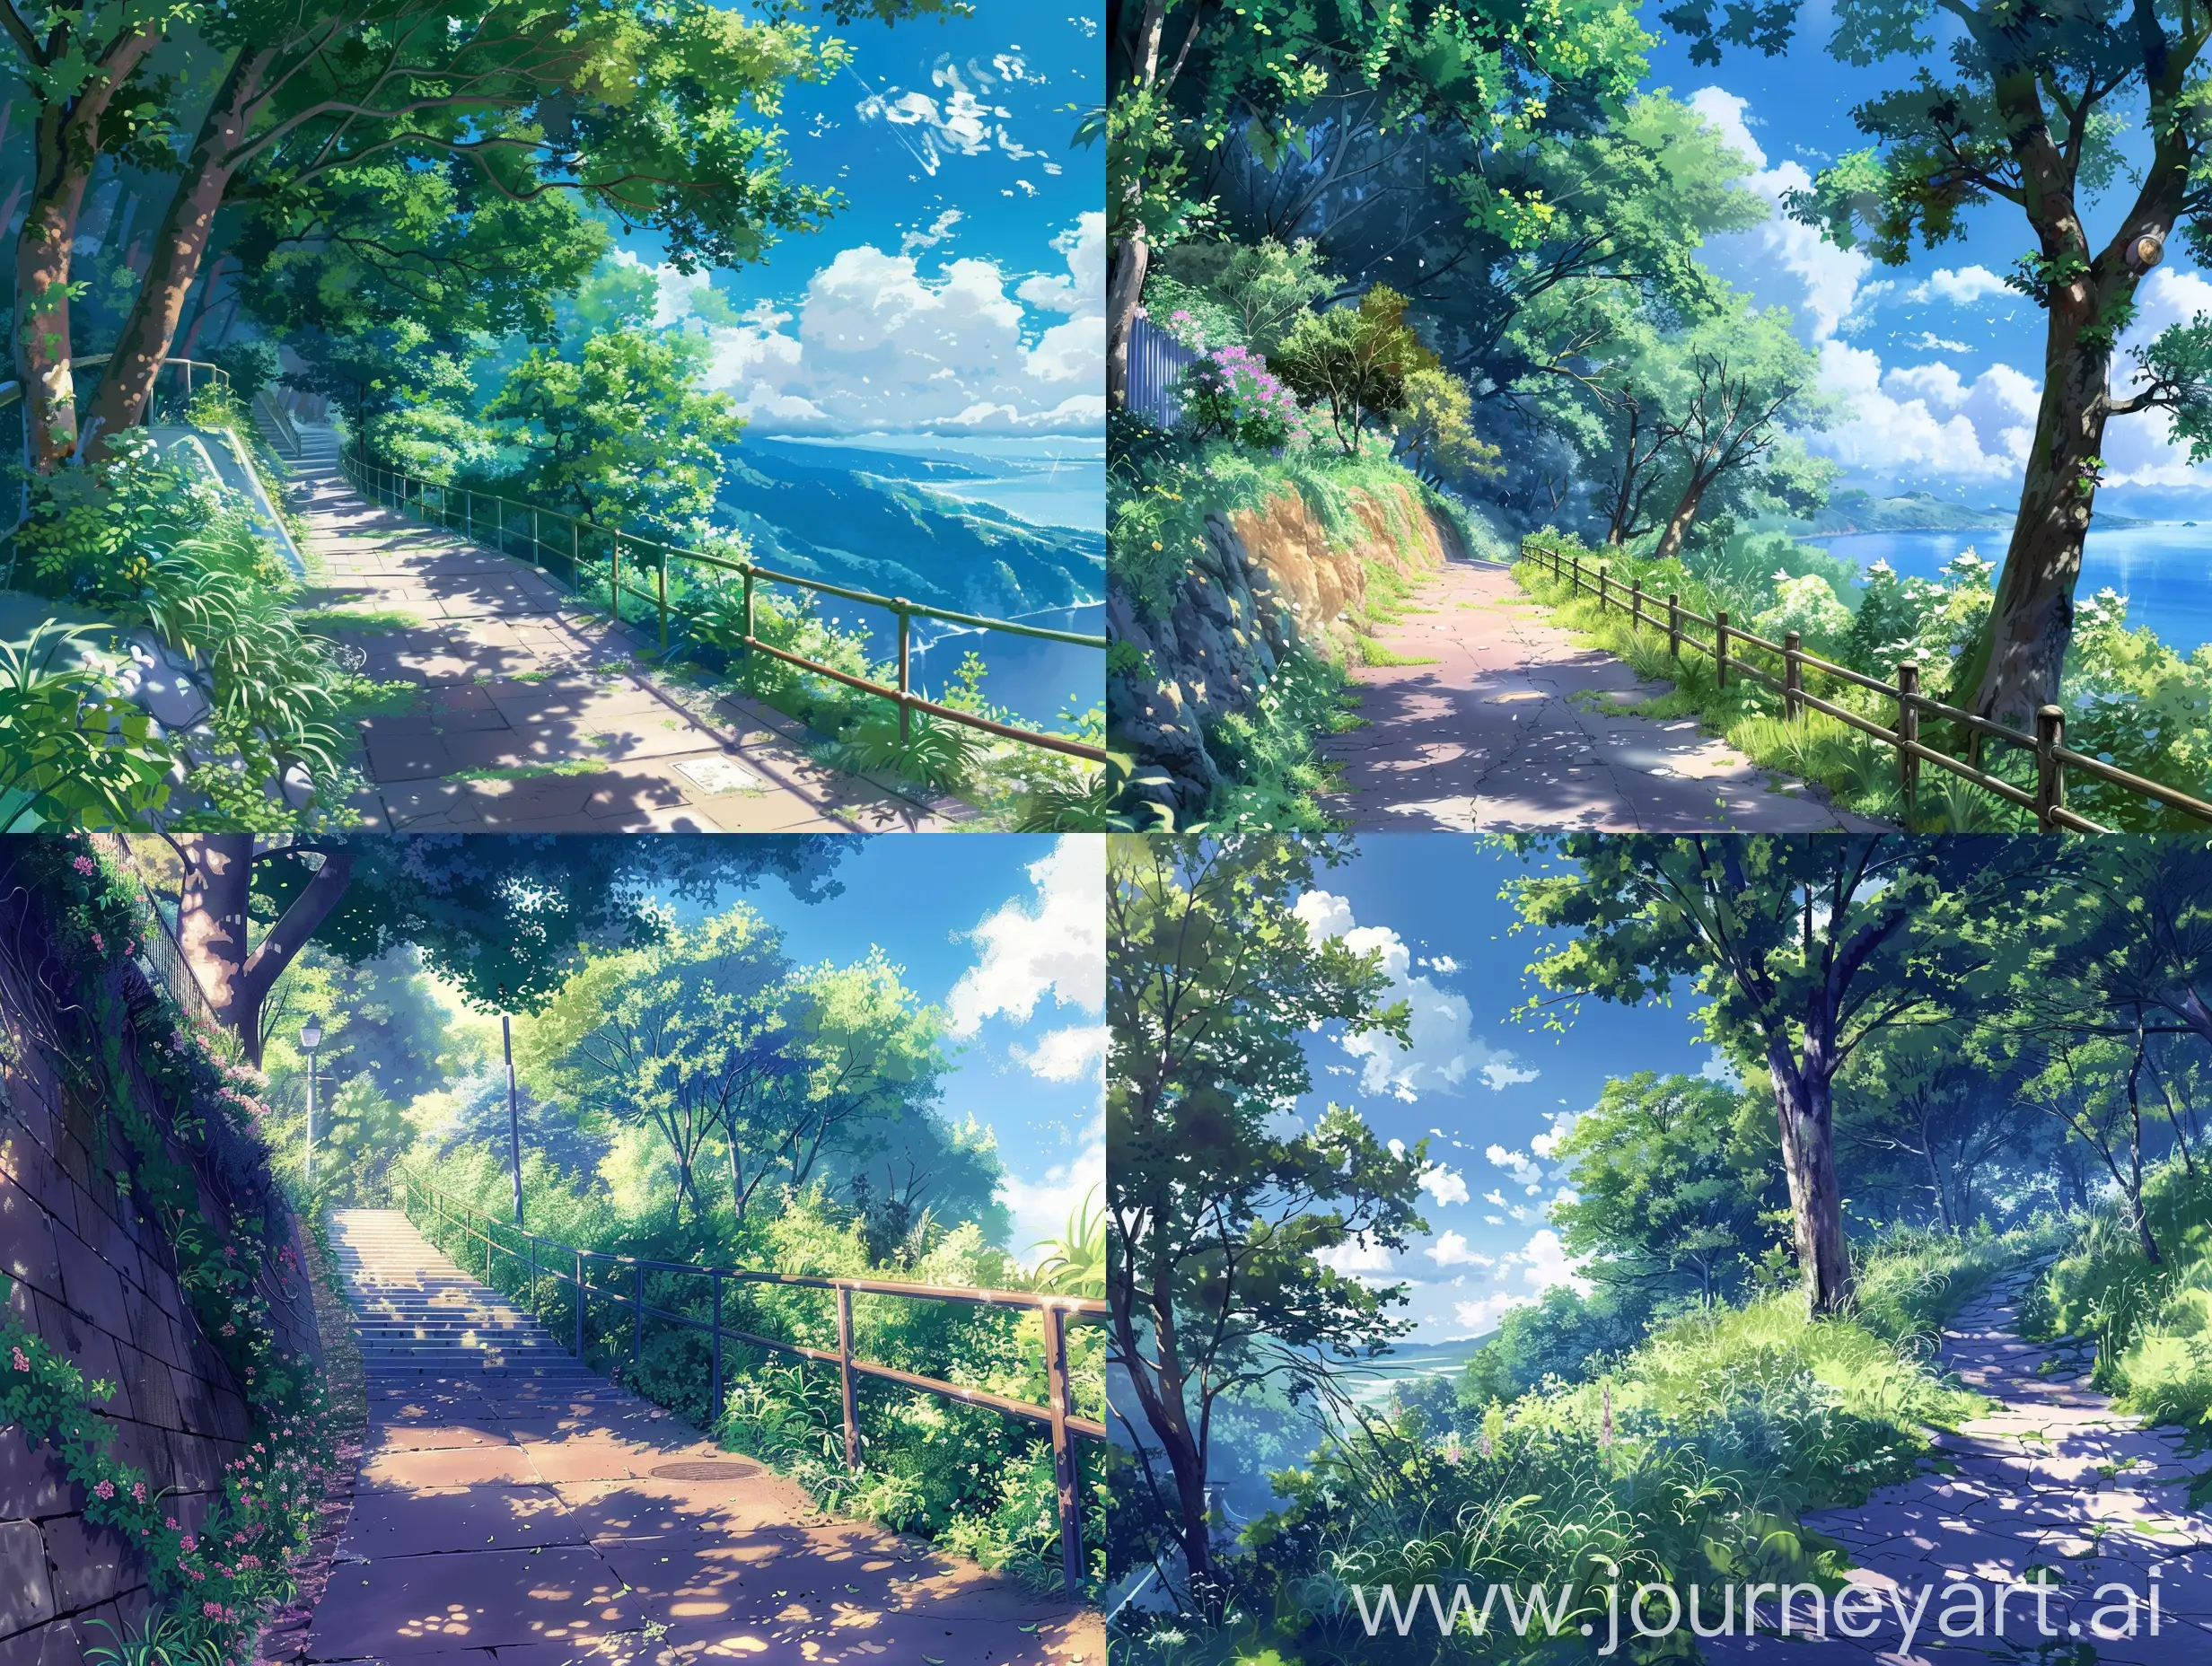 Beautiful Anime style scenery,mokoto shinkai style,beautiful summers,a path,downstairs,trees alongside,beautiful sky,sharp detailed 